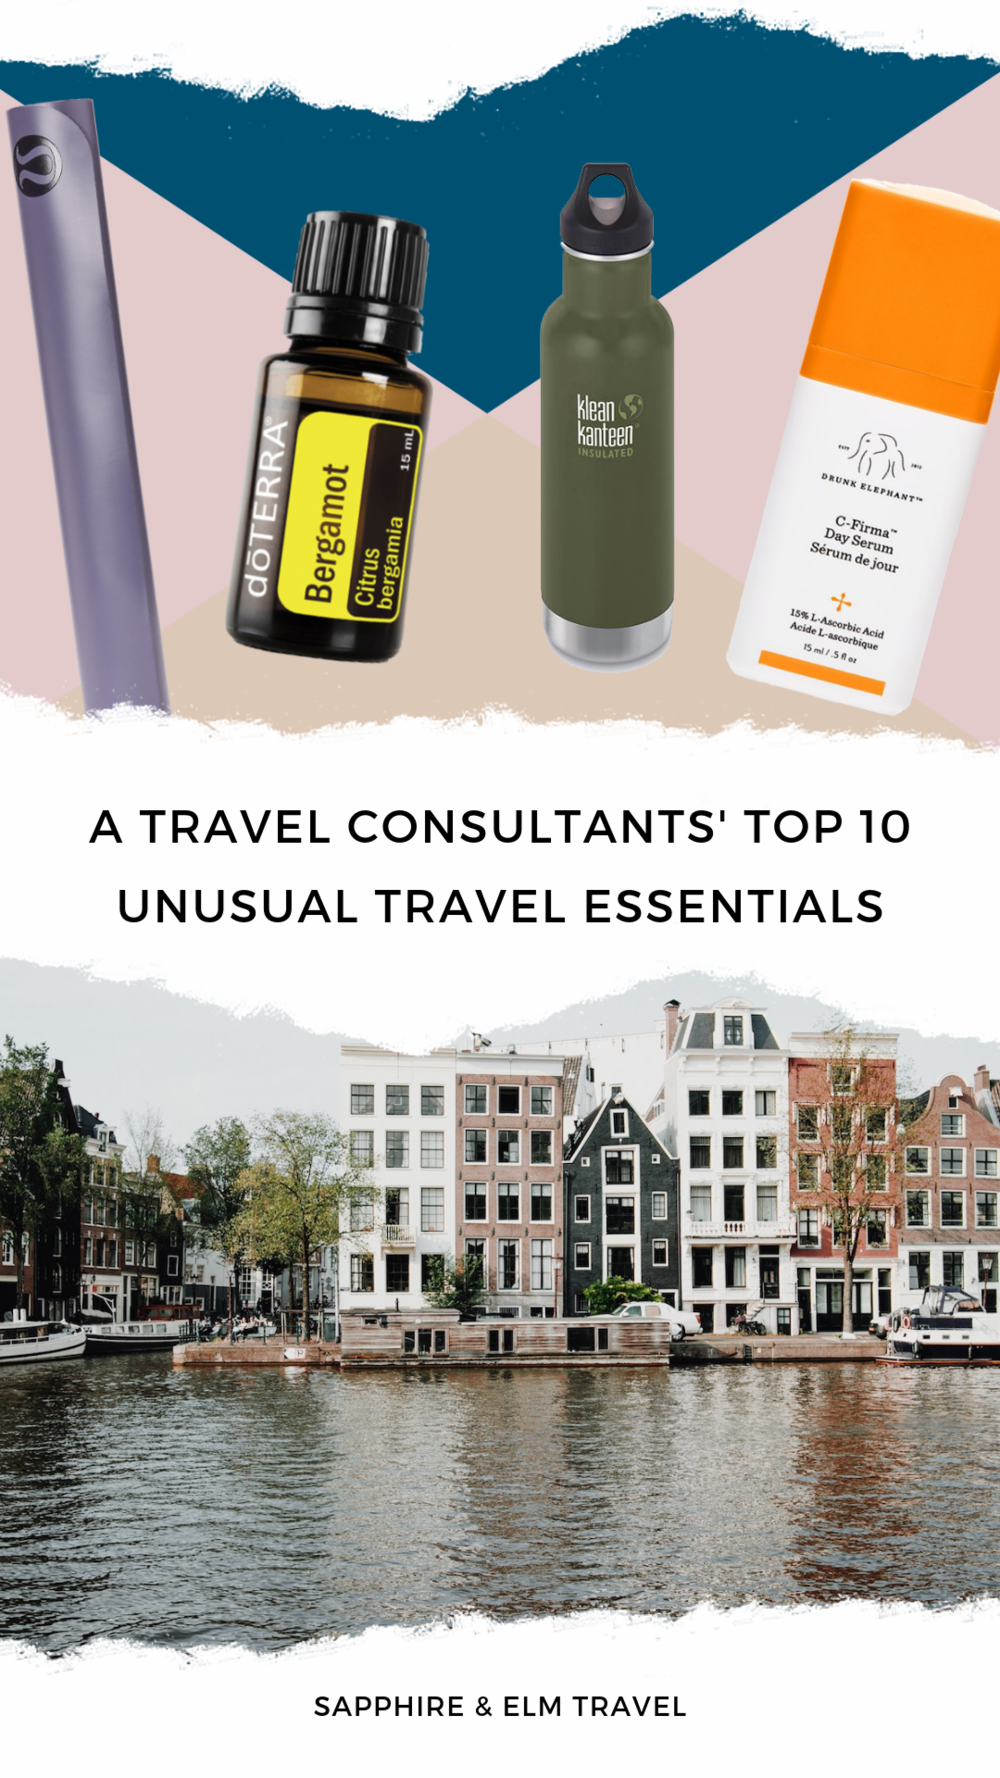 Travel Agents' Top 10 Unusual Travel Essentials | Sapphire & Elm Travel